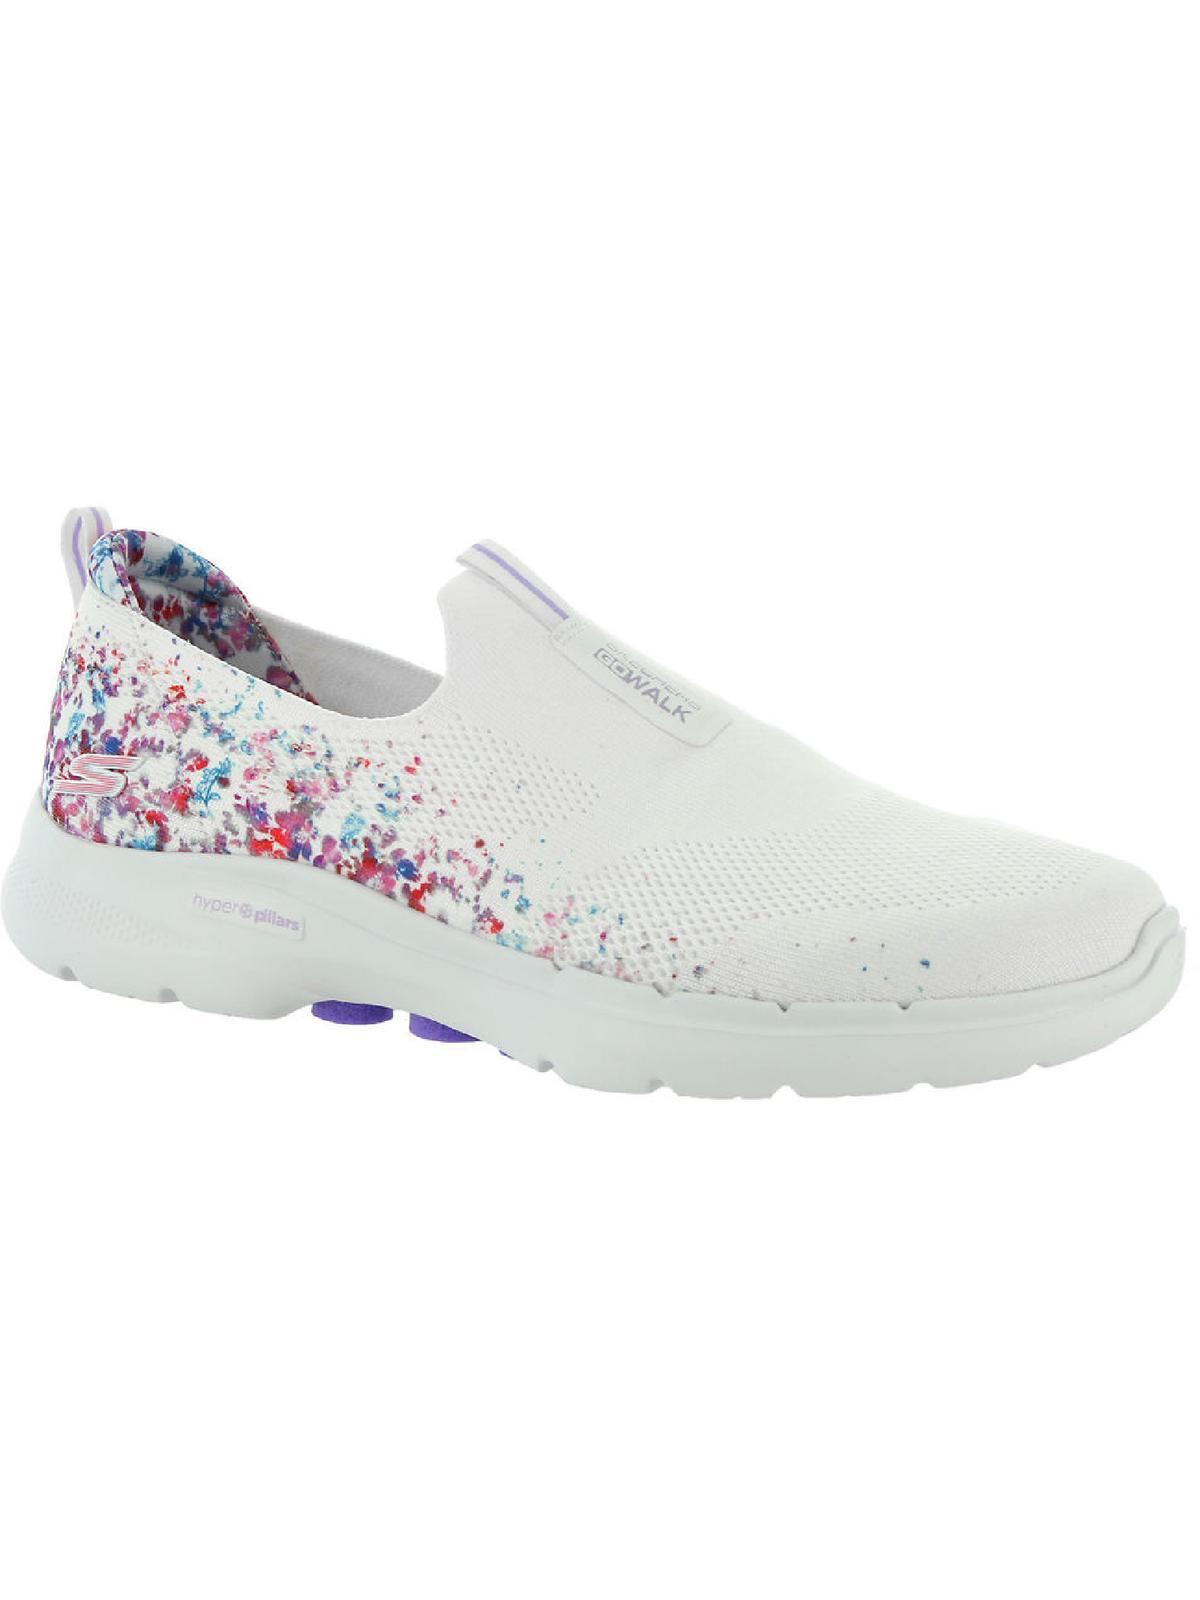 Skechers Go Walk 6 - Floral Sunrise Active Memory Foam Slip-on Sneakers in  White